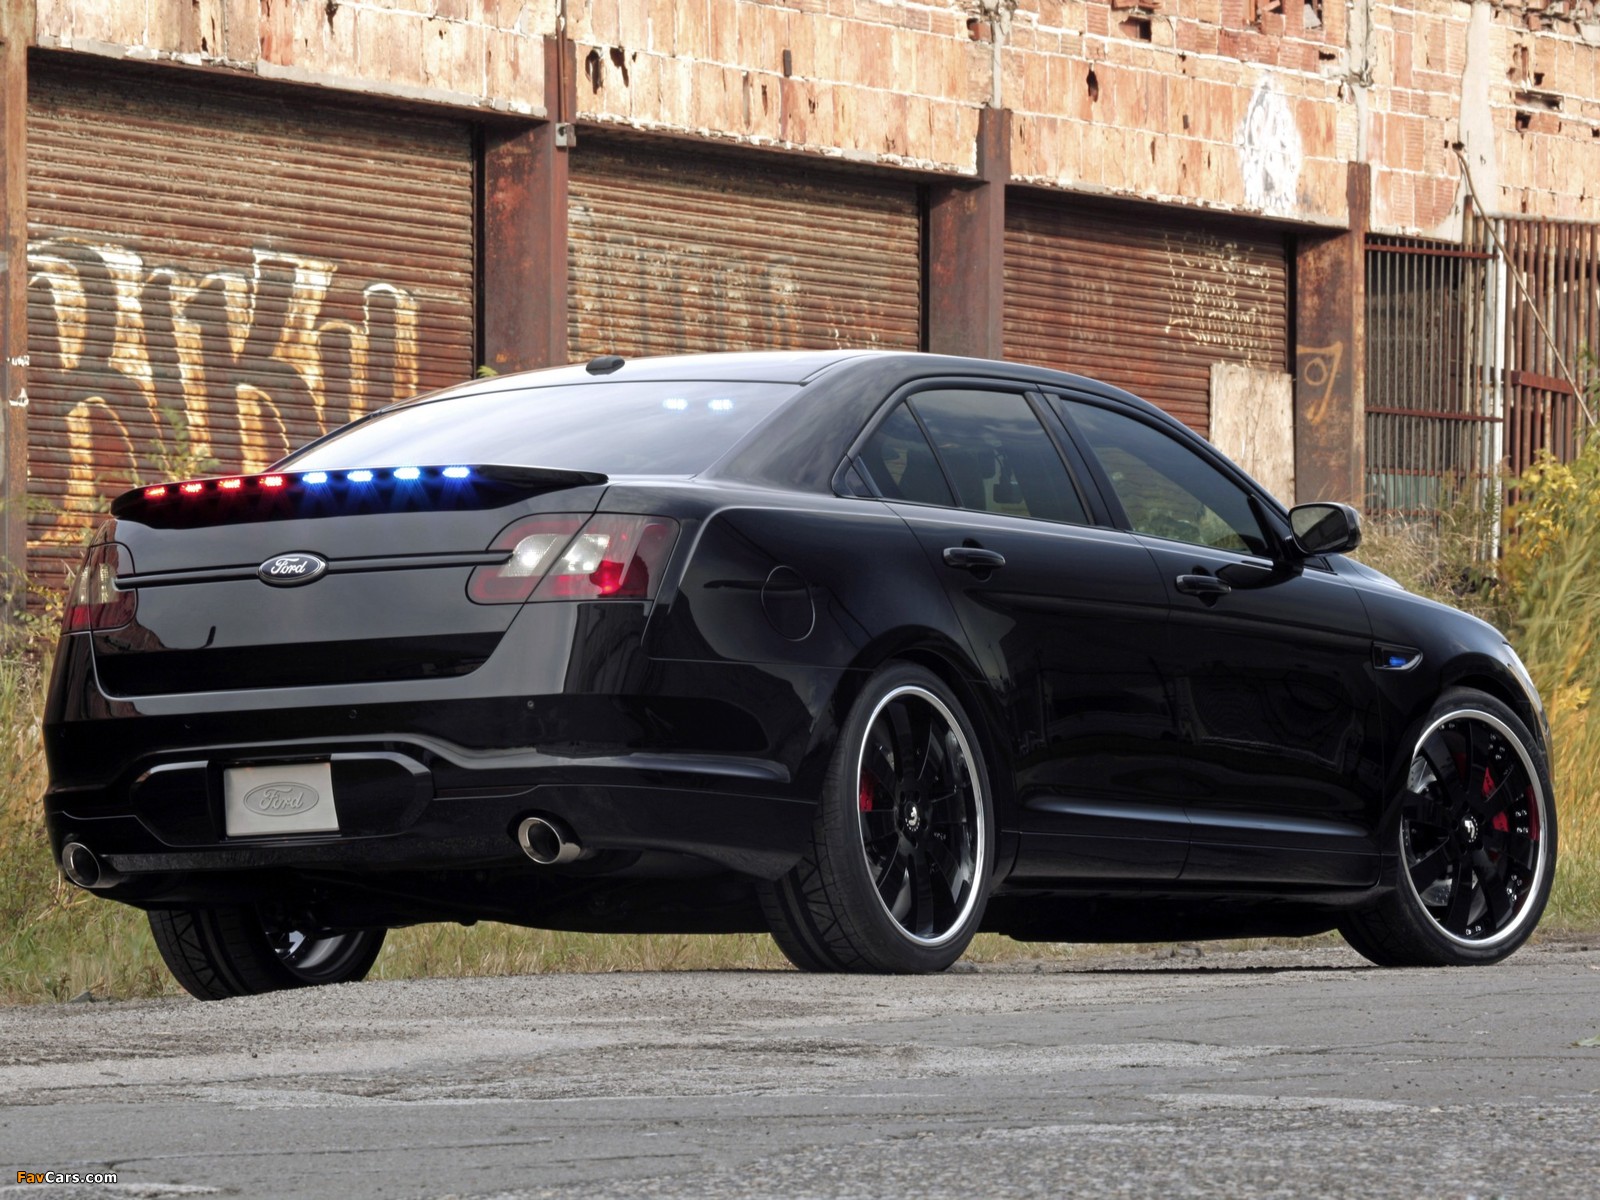 Stealth Ford Police Interceptor Sedan Concept 2010 photos (1600 x 1200)